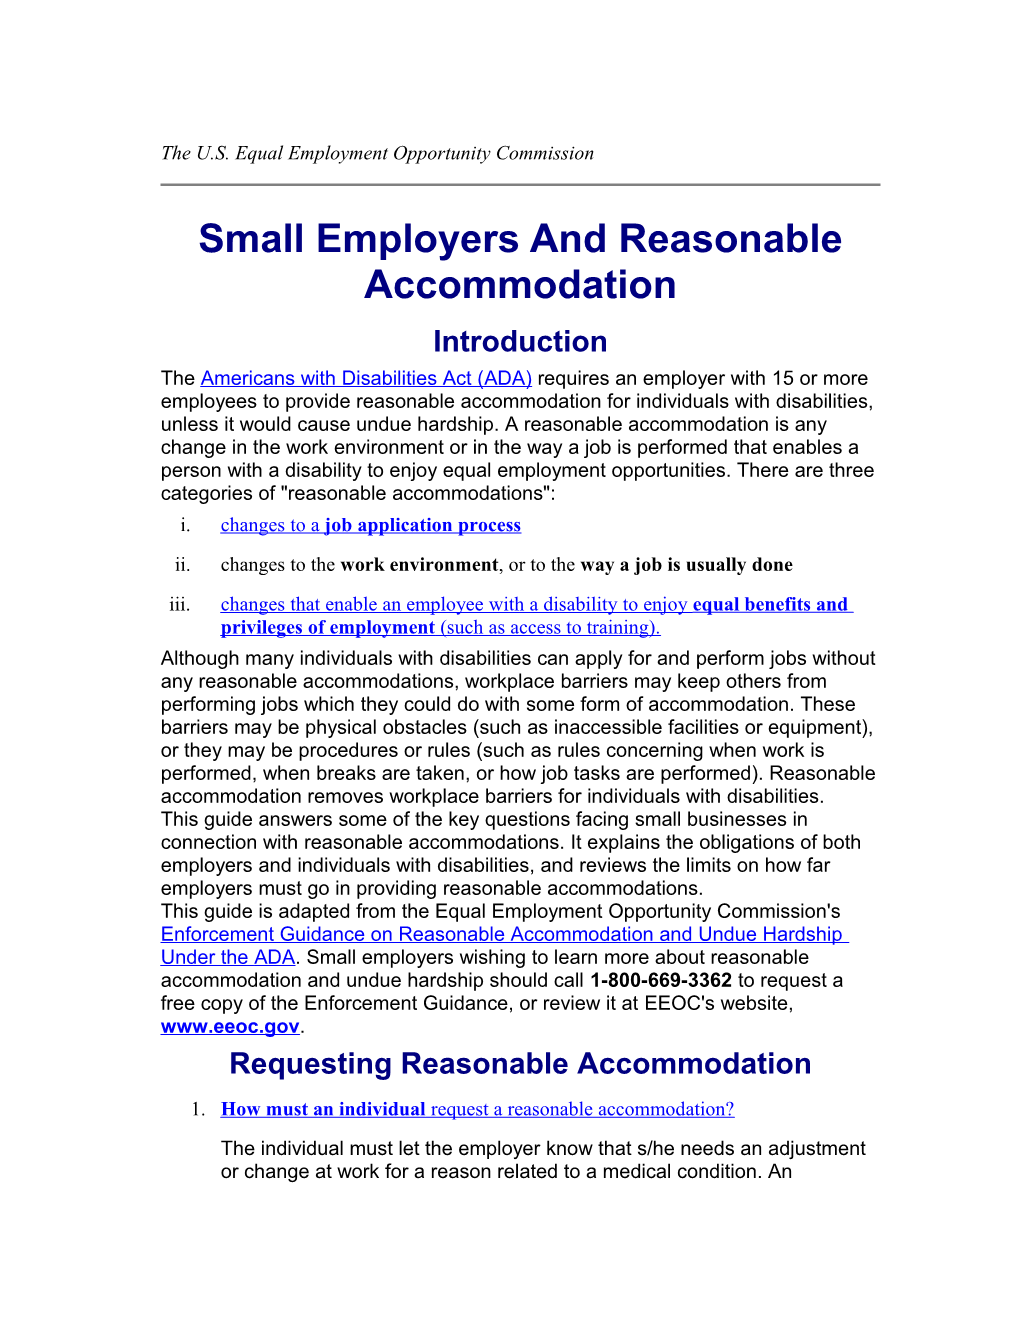 Small Employers and Reasonable Accommodation